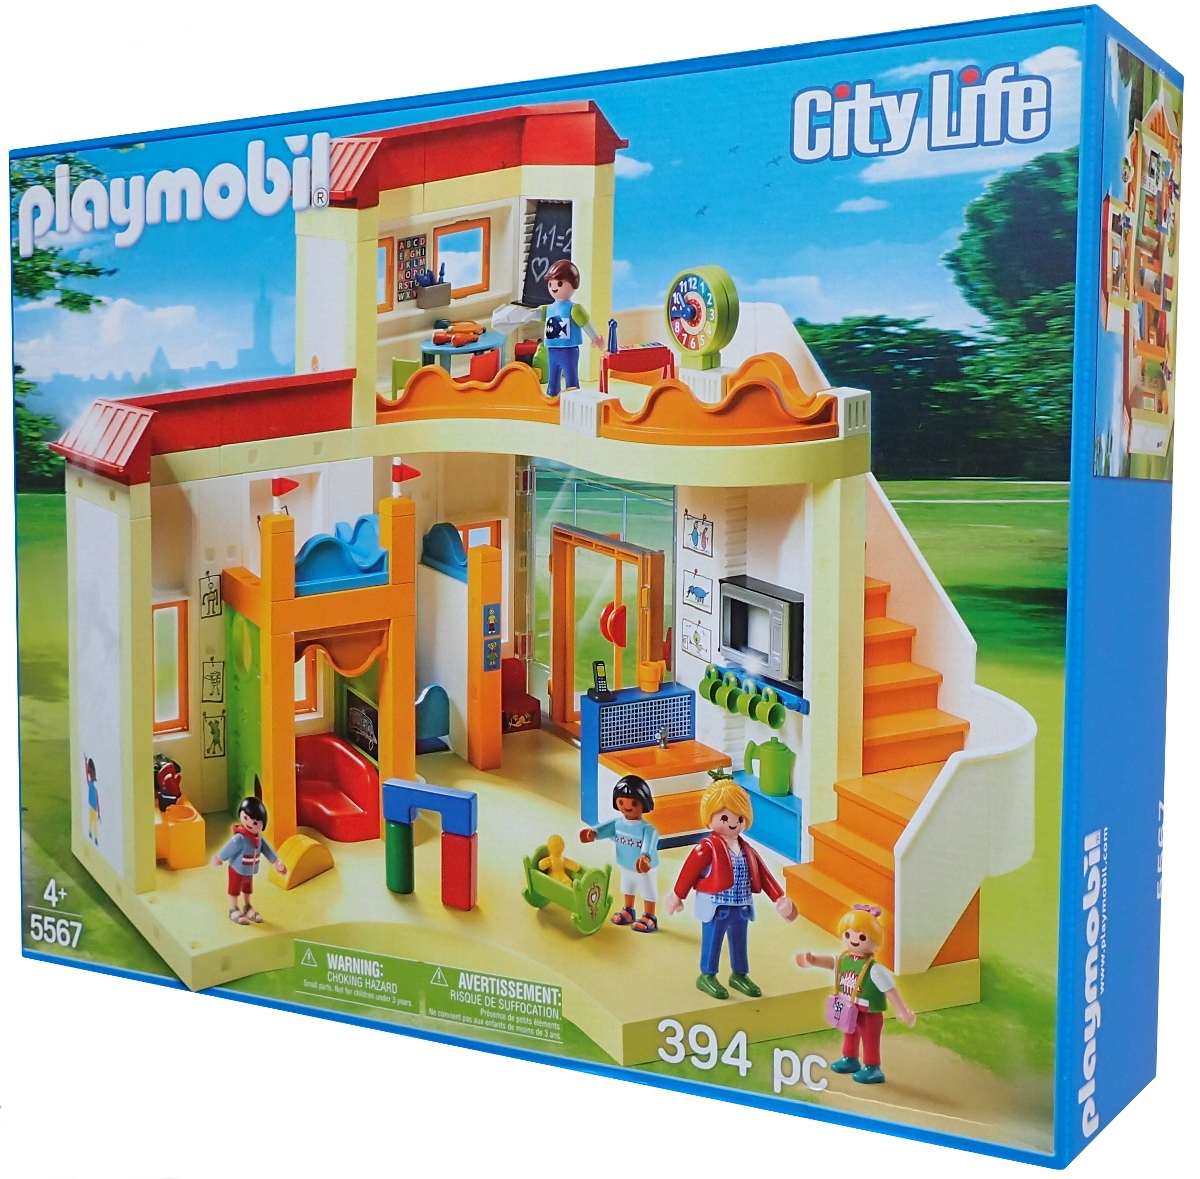 Playmobil City Life 5567 Przedszkole Klocki el - Allegro.pl